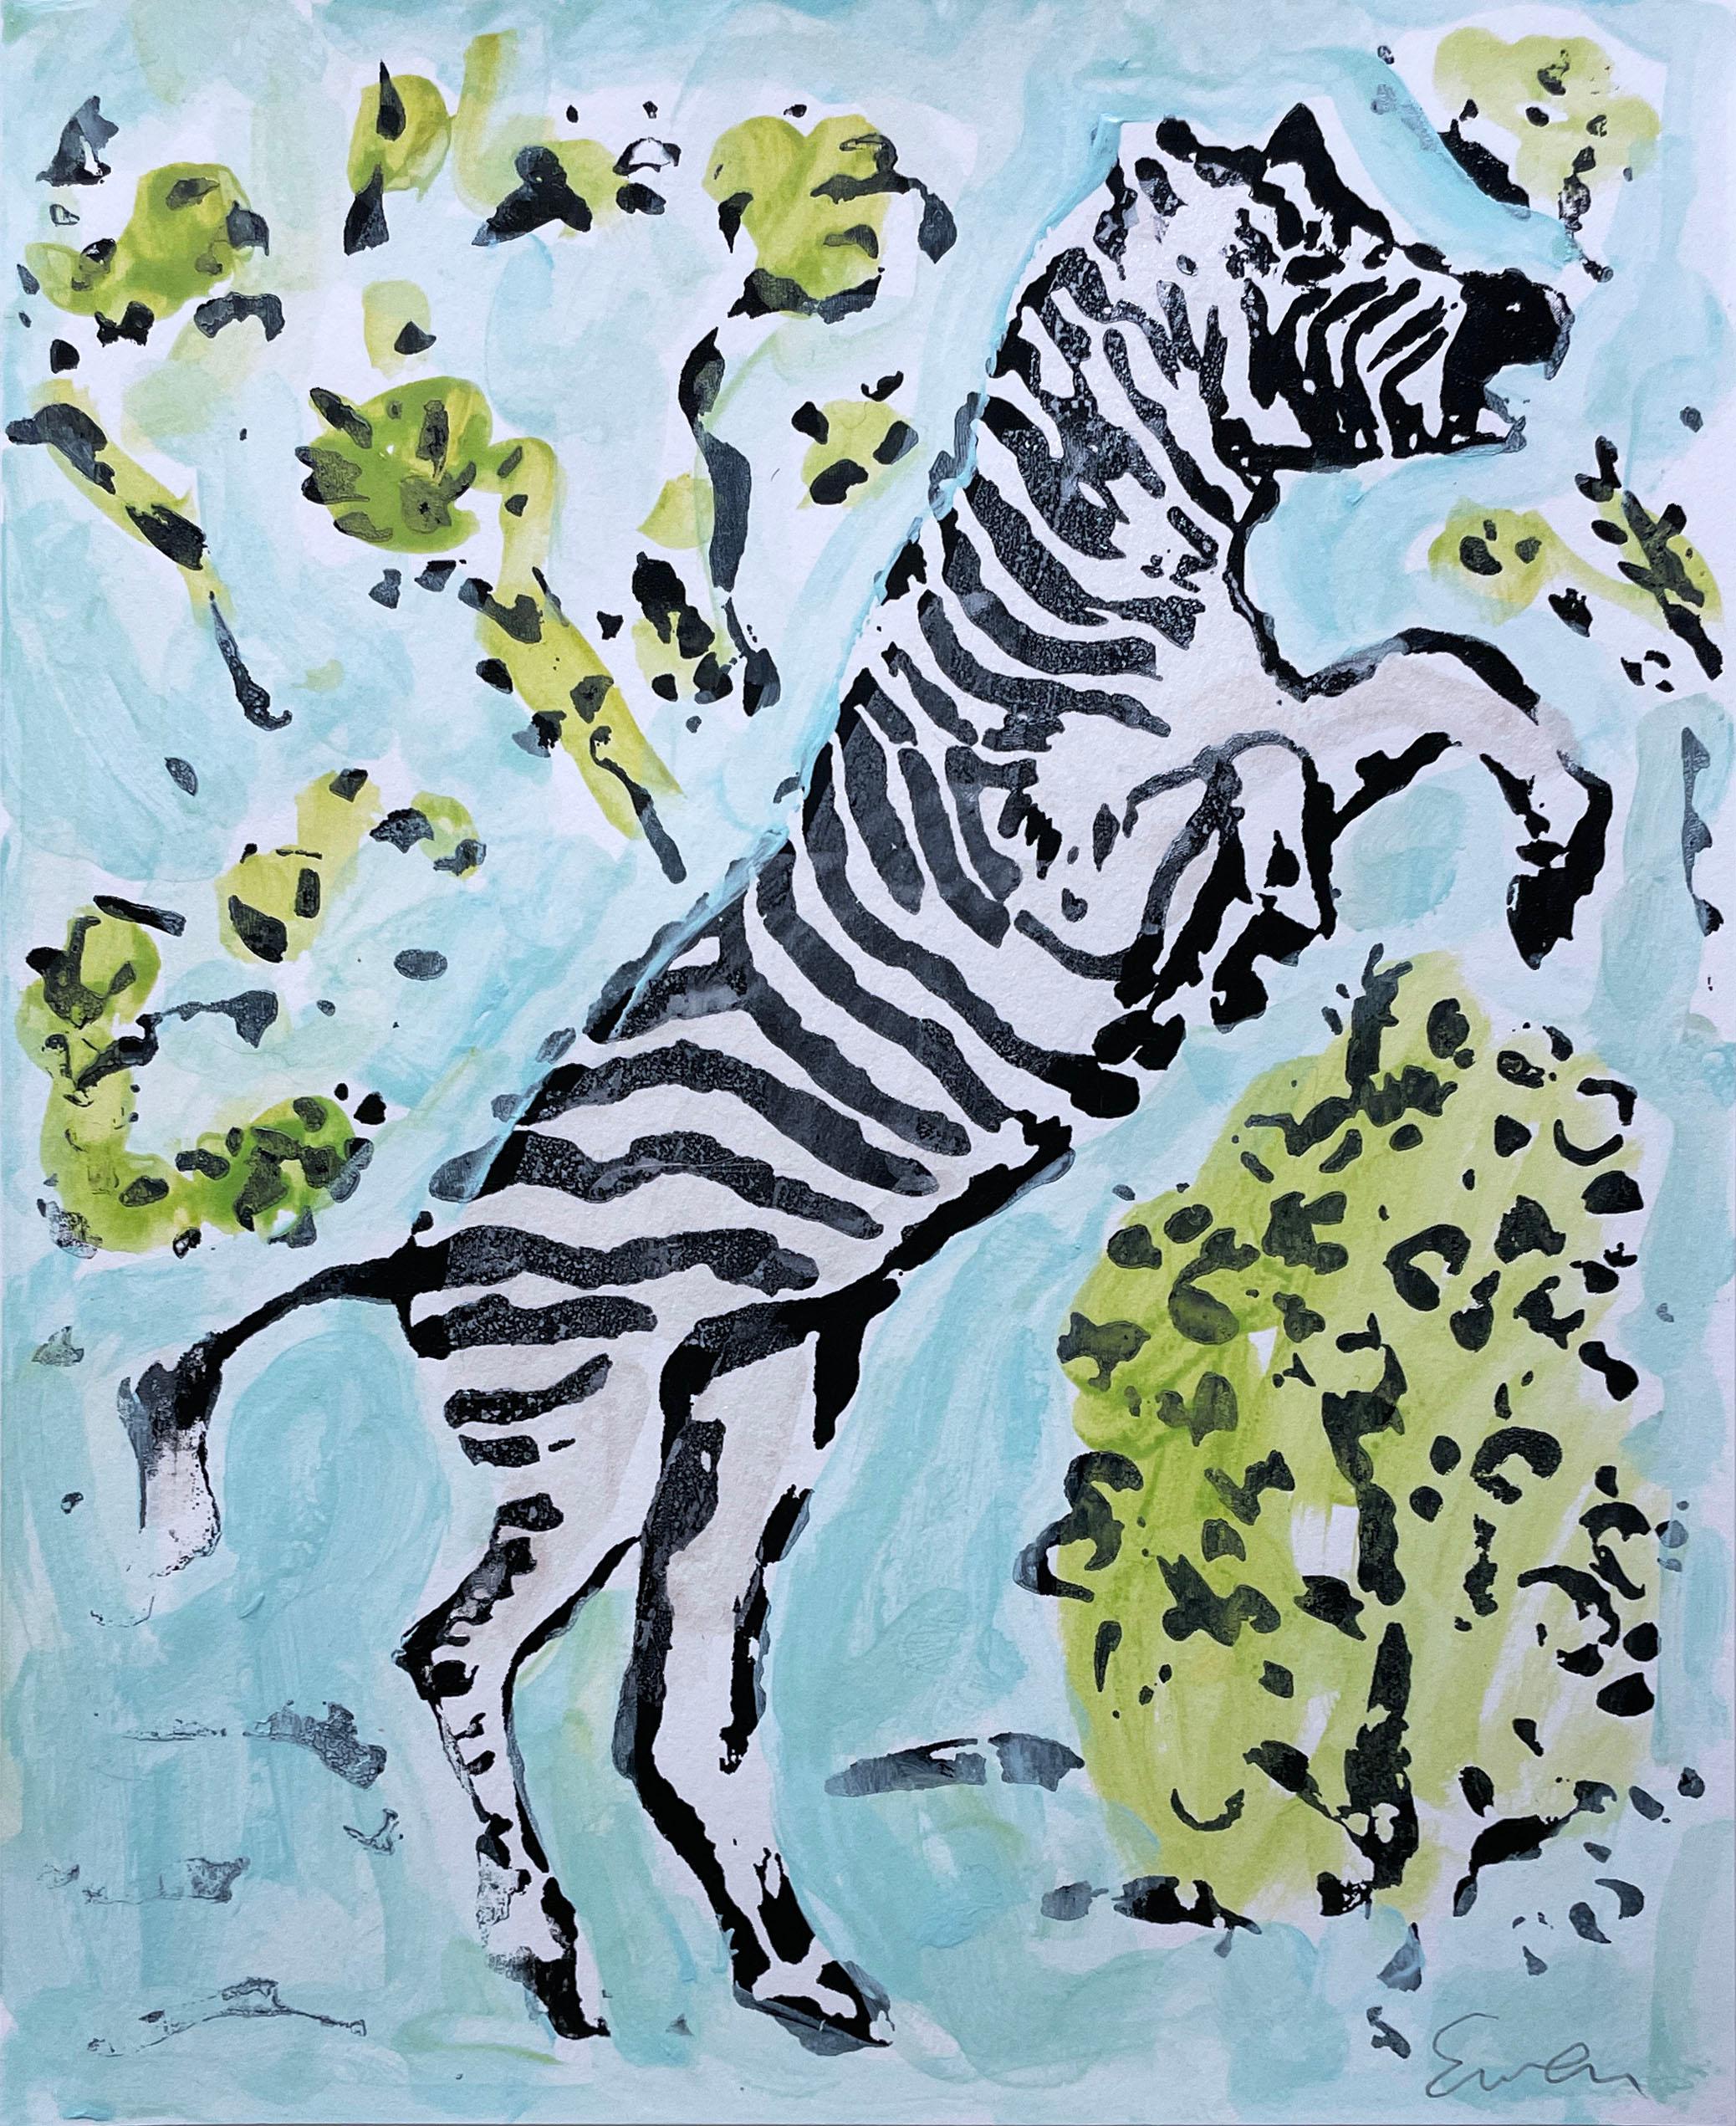 Zebra I (2022), work on paper, hand painted multiple, animal and foliage, neo impressionist, botanical, pastels, aqua and lime green, black and white zebra

